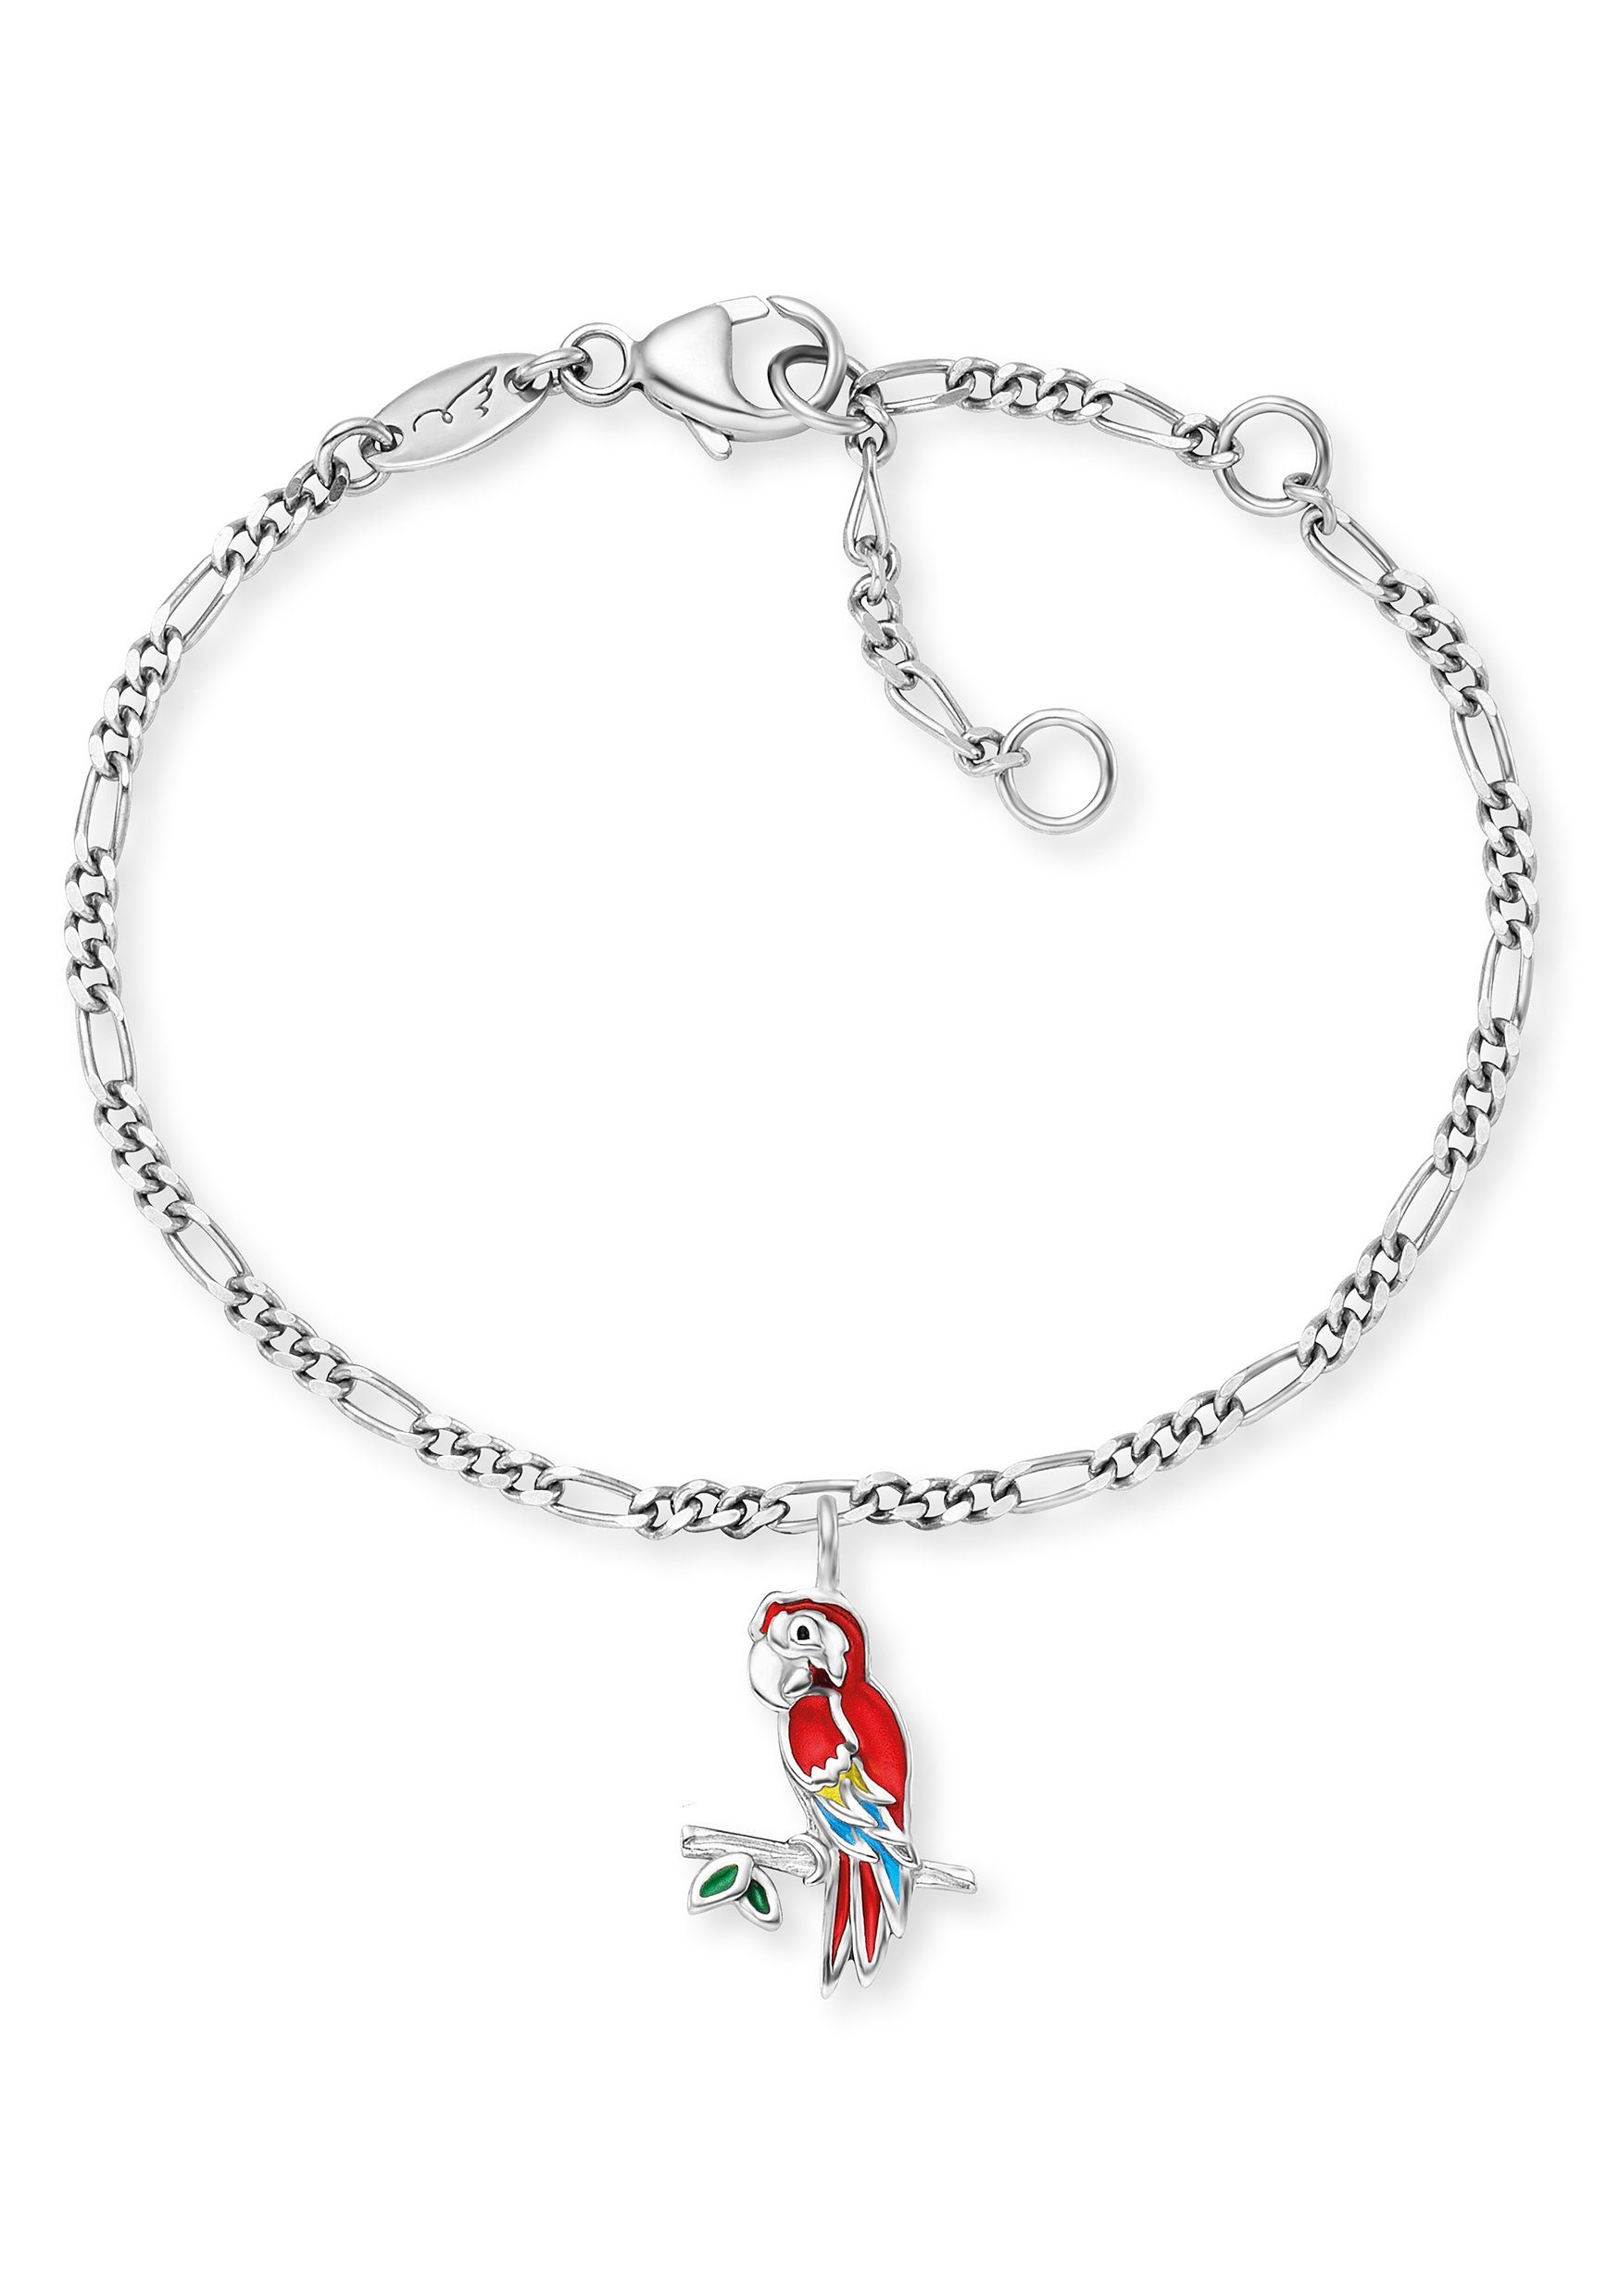 Herzengel Wickelarmband Set Herzengel Armband Mädchen HEB-PARROT Papagei | Silberarmbänder